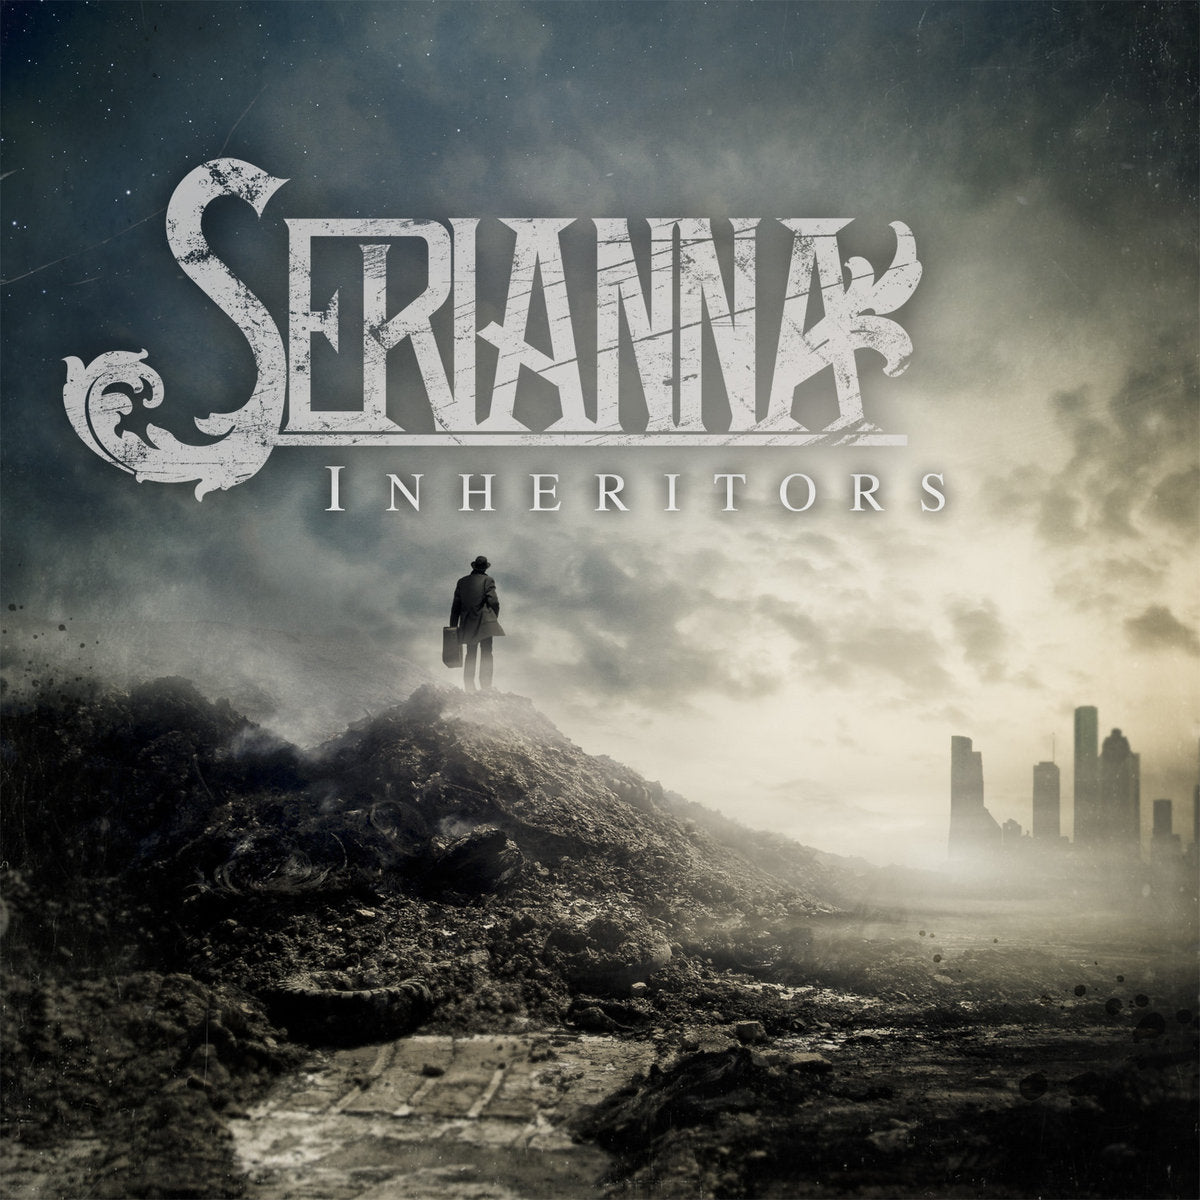 Serianna "Inheritors" CD